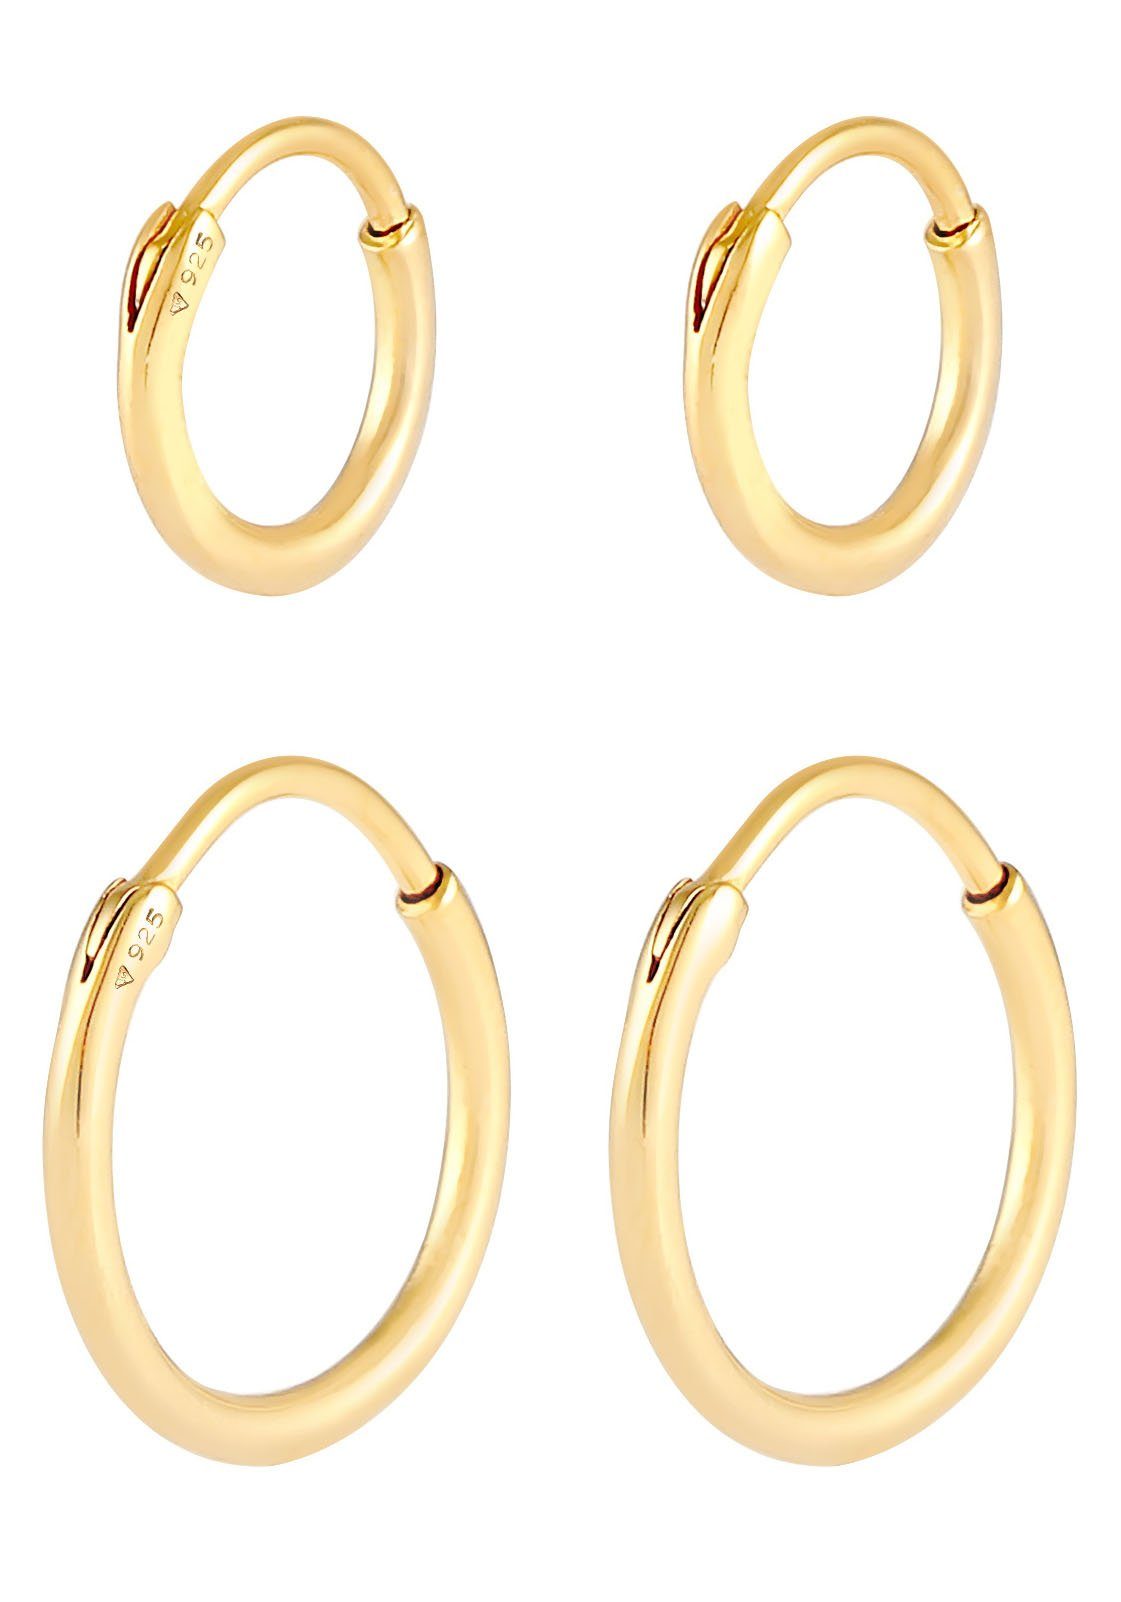 Goldene Herrenohrringe kaufen » Herren Gold Ohrringe | OTTO